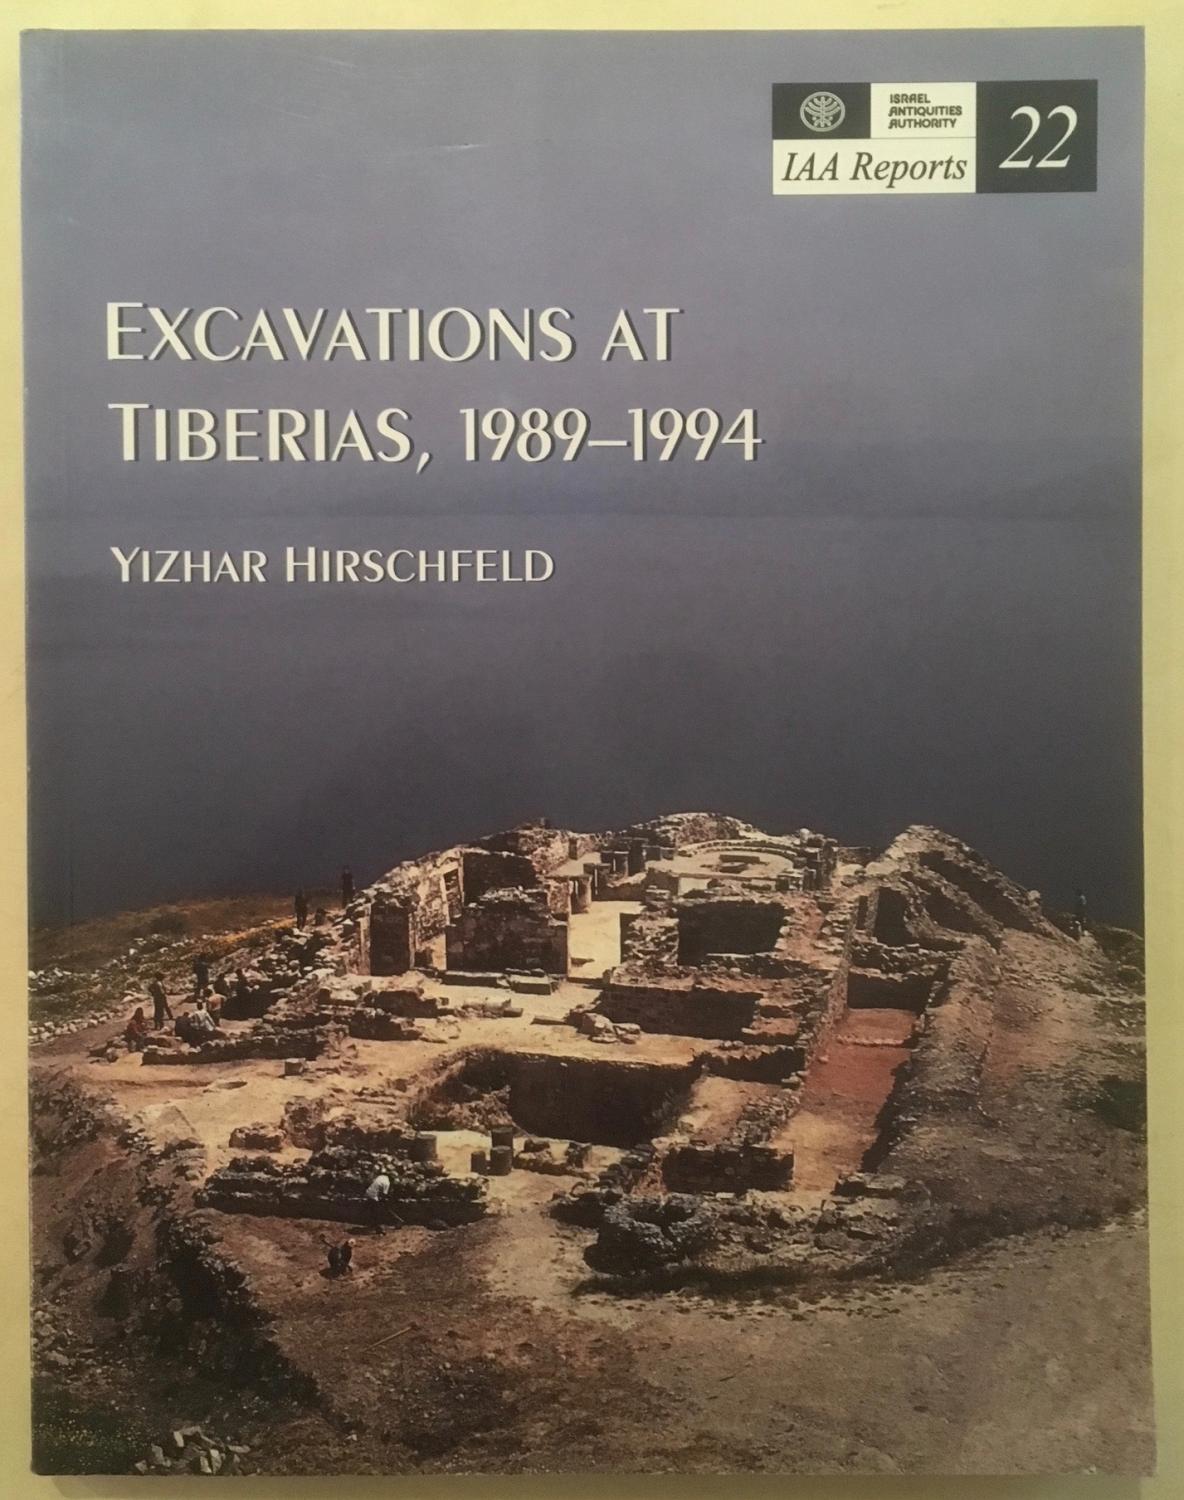 Excavations at Tiberias 1989-1994 [IAA Reports 22] - Yizhar Hirschfeld